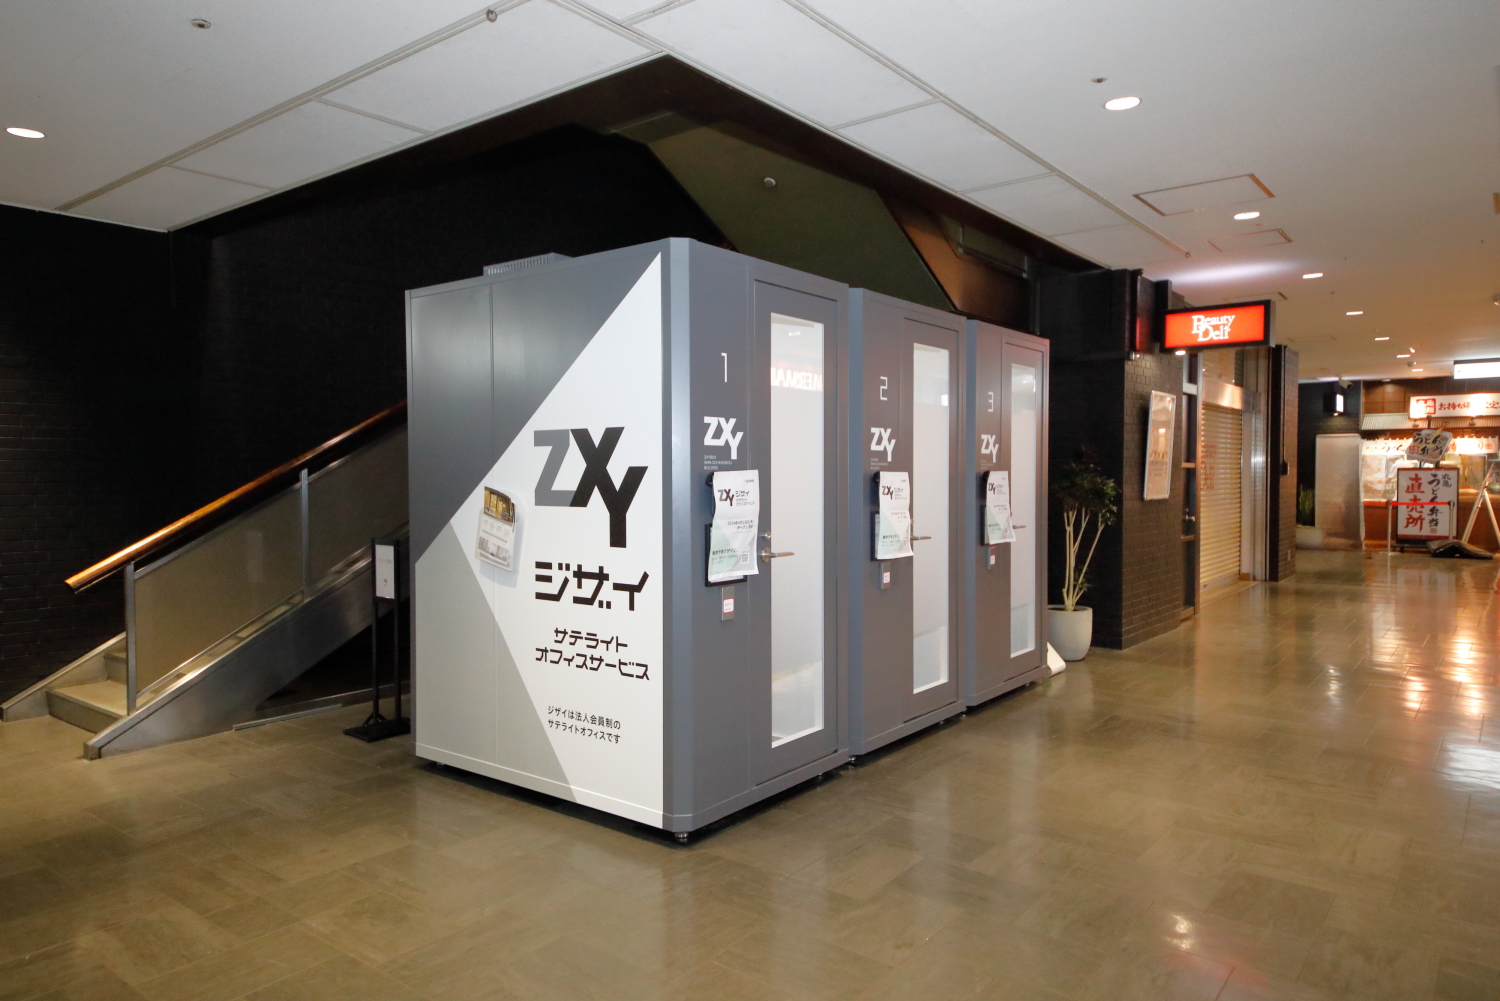 ZXY［ジザイ］BOX新お茶の水ビルディング | サテライトオフィス 